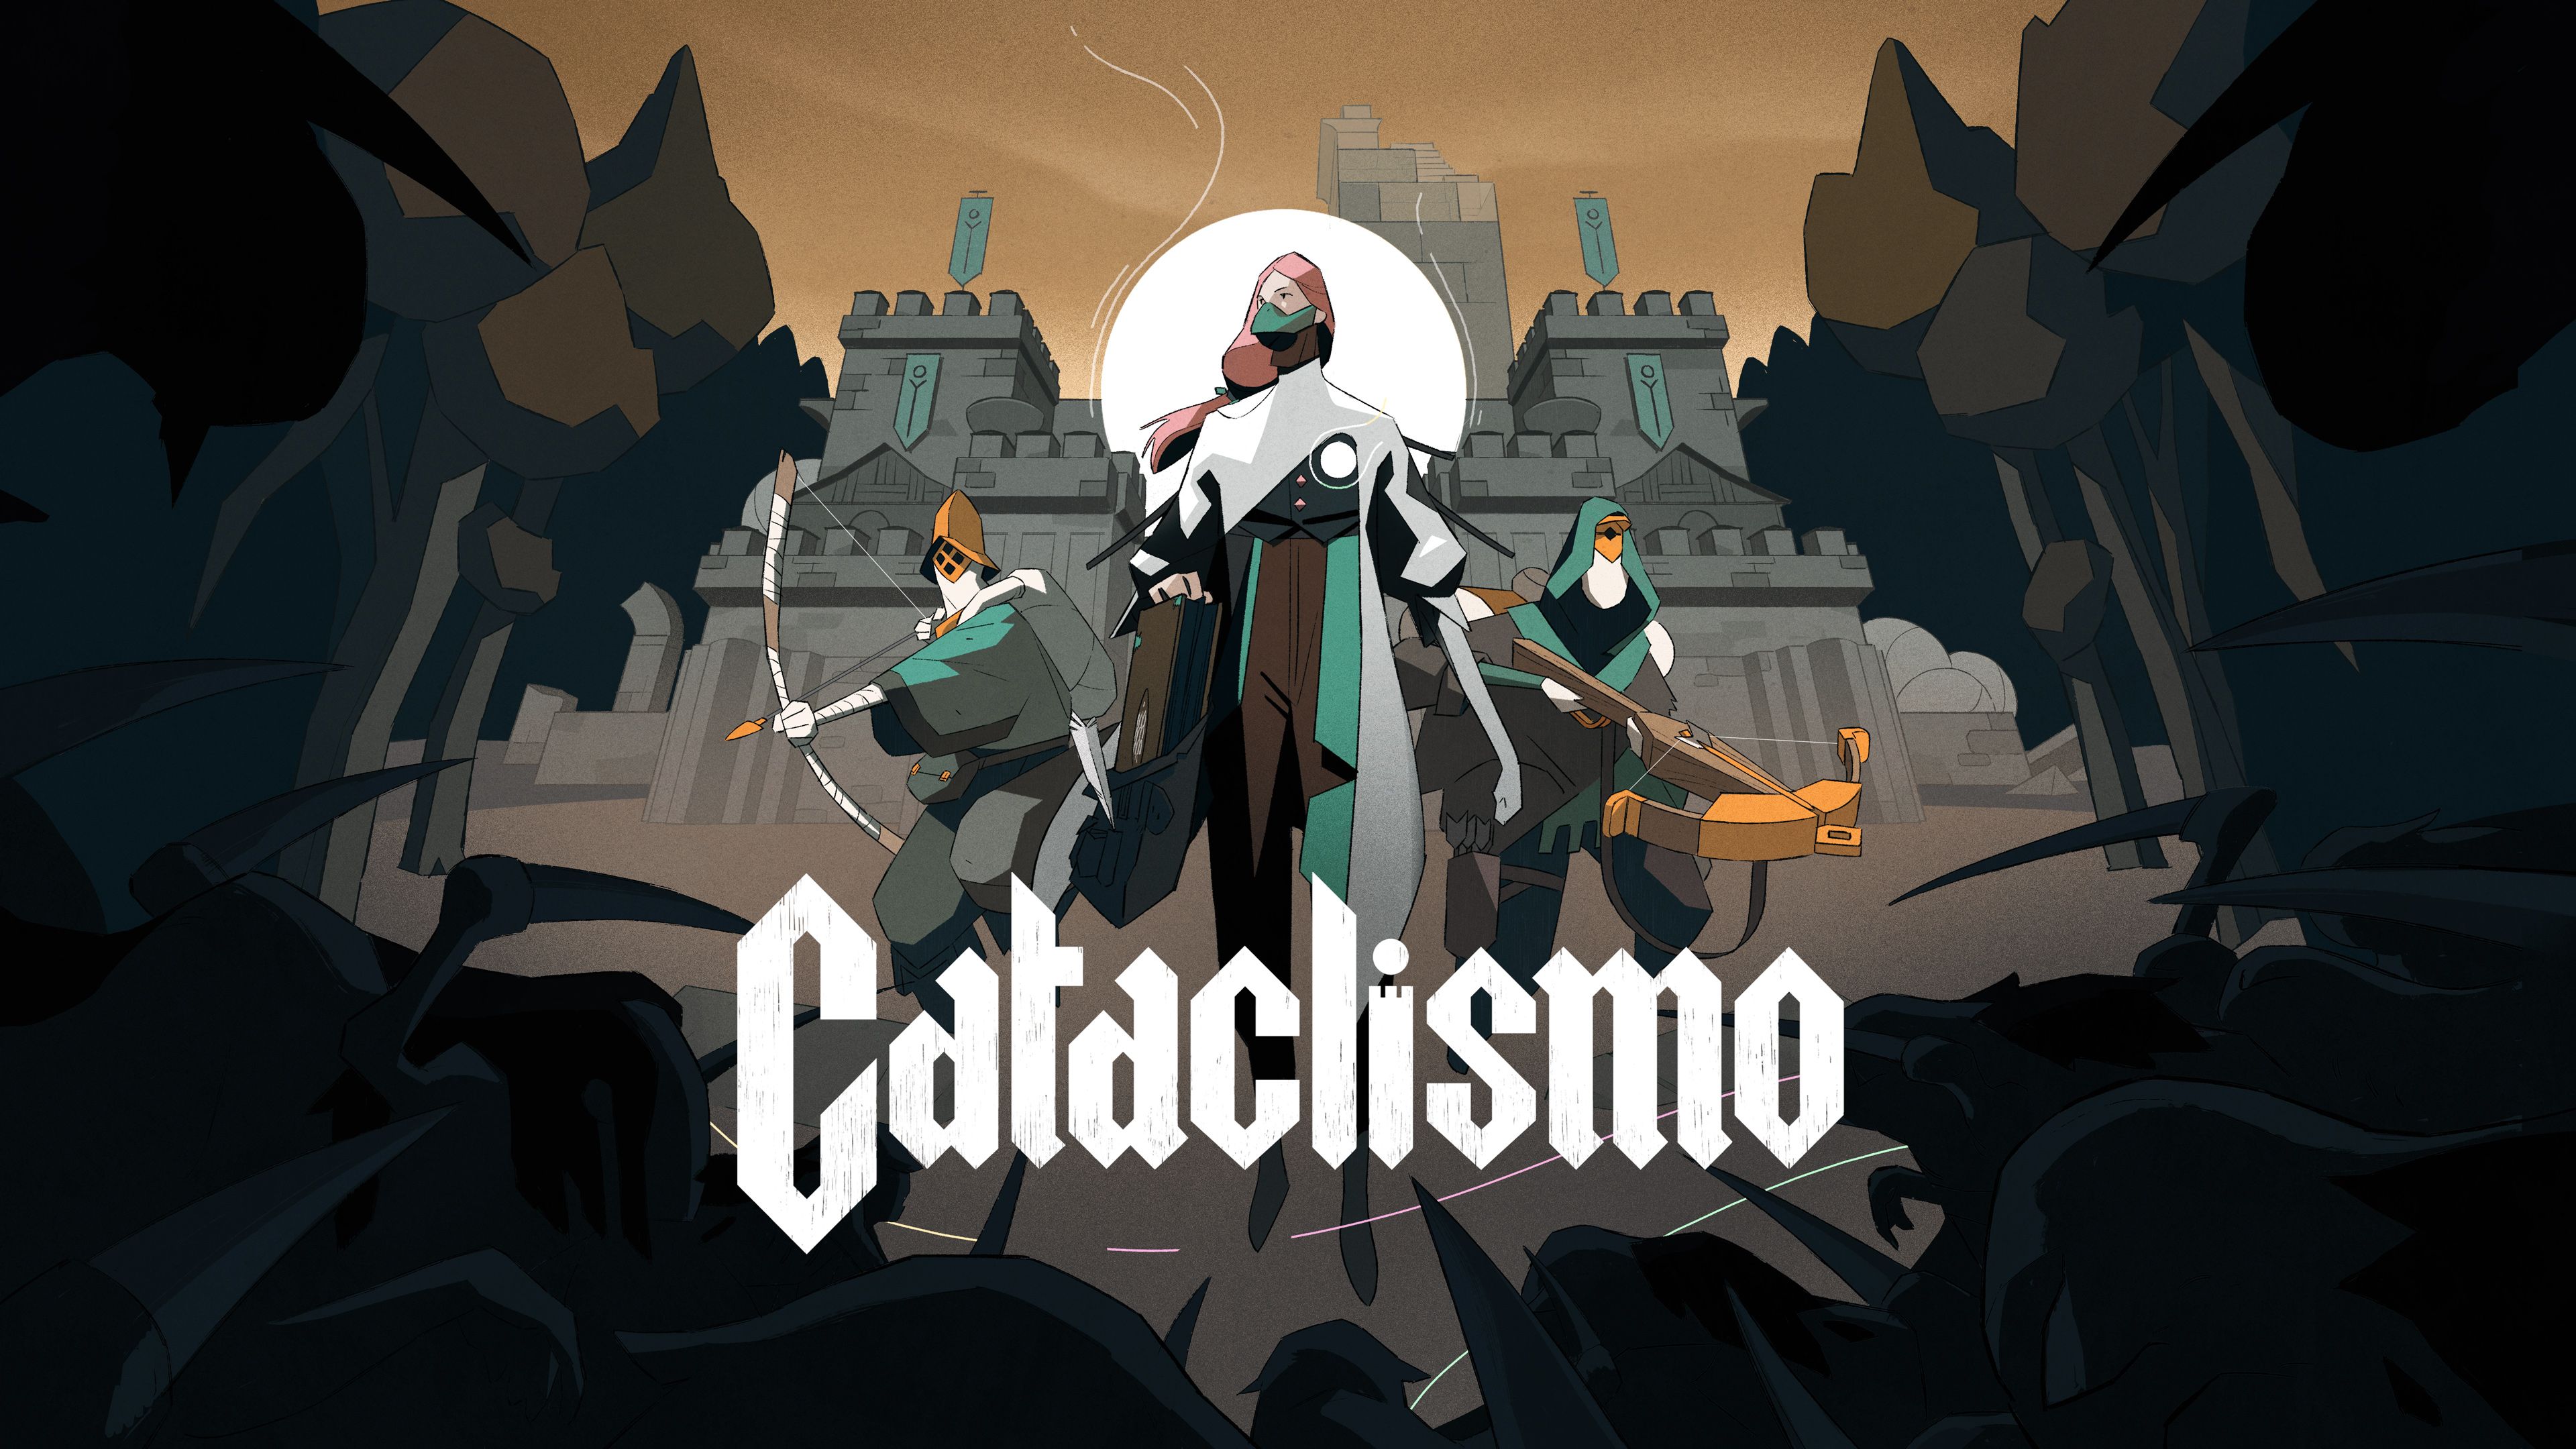 cataclysm humble games